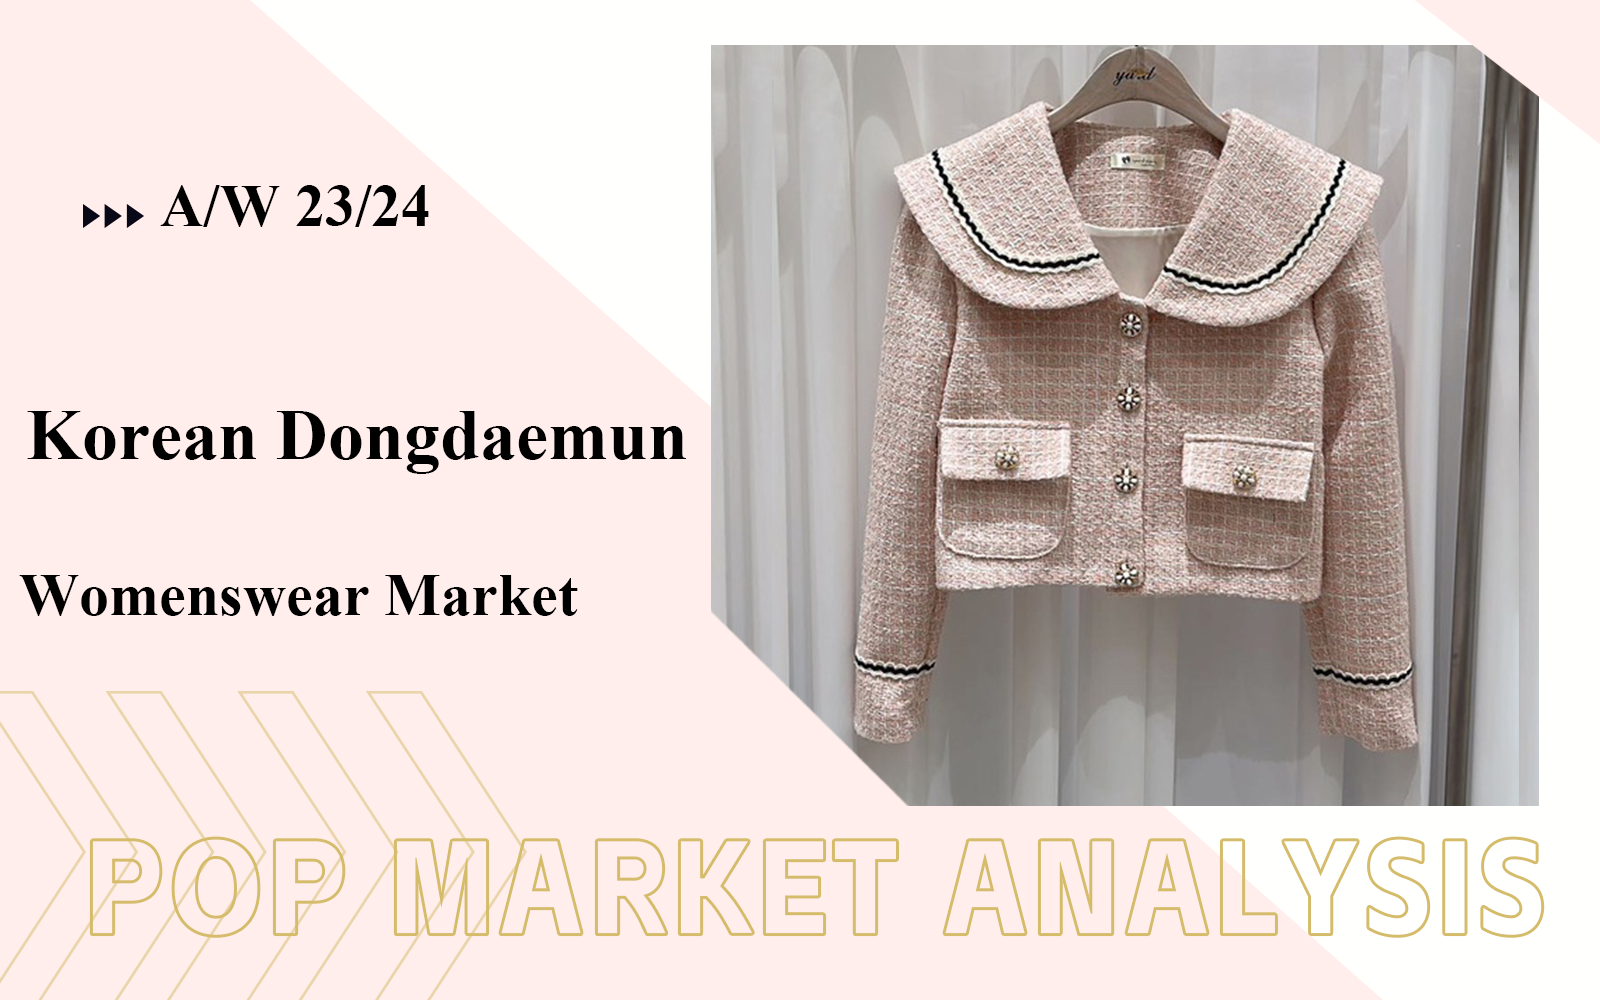 The New Arrivals Analysis of Dongdaemun Womenswear Market